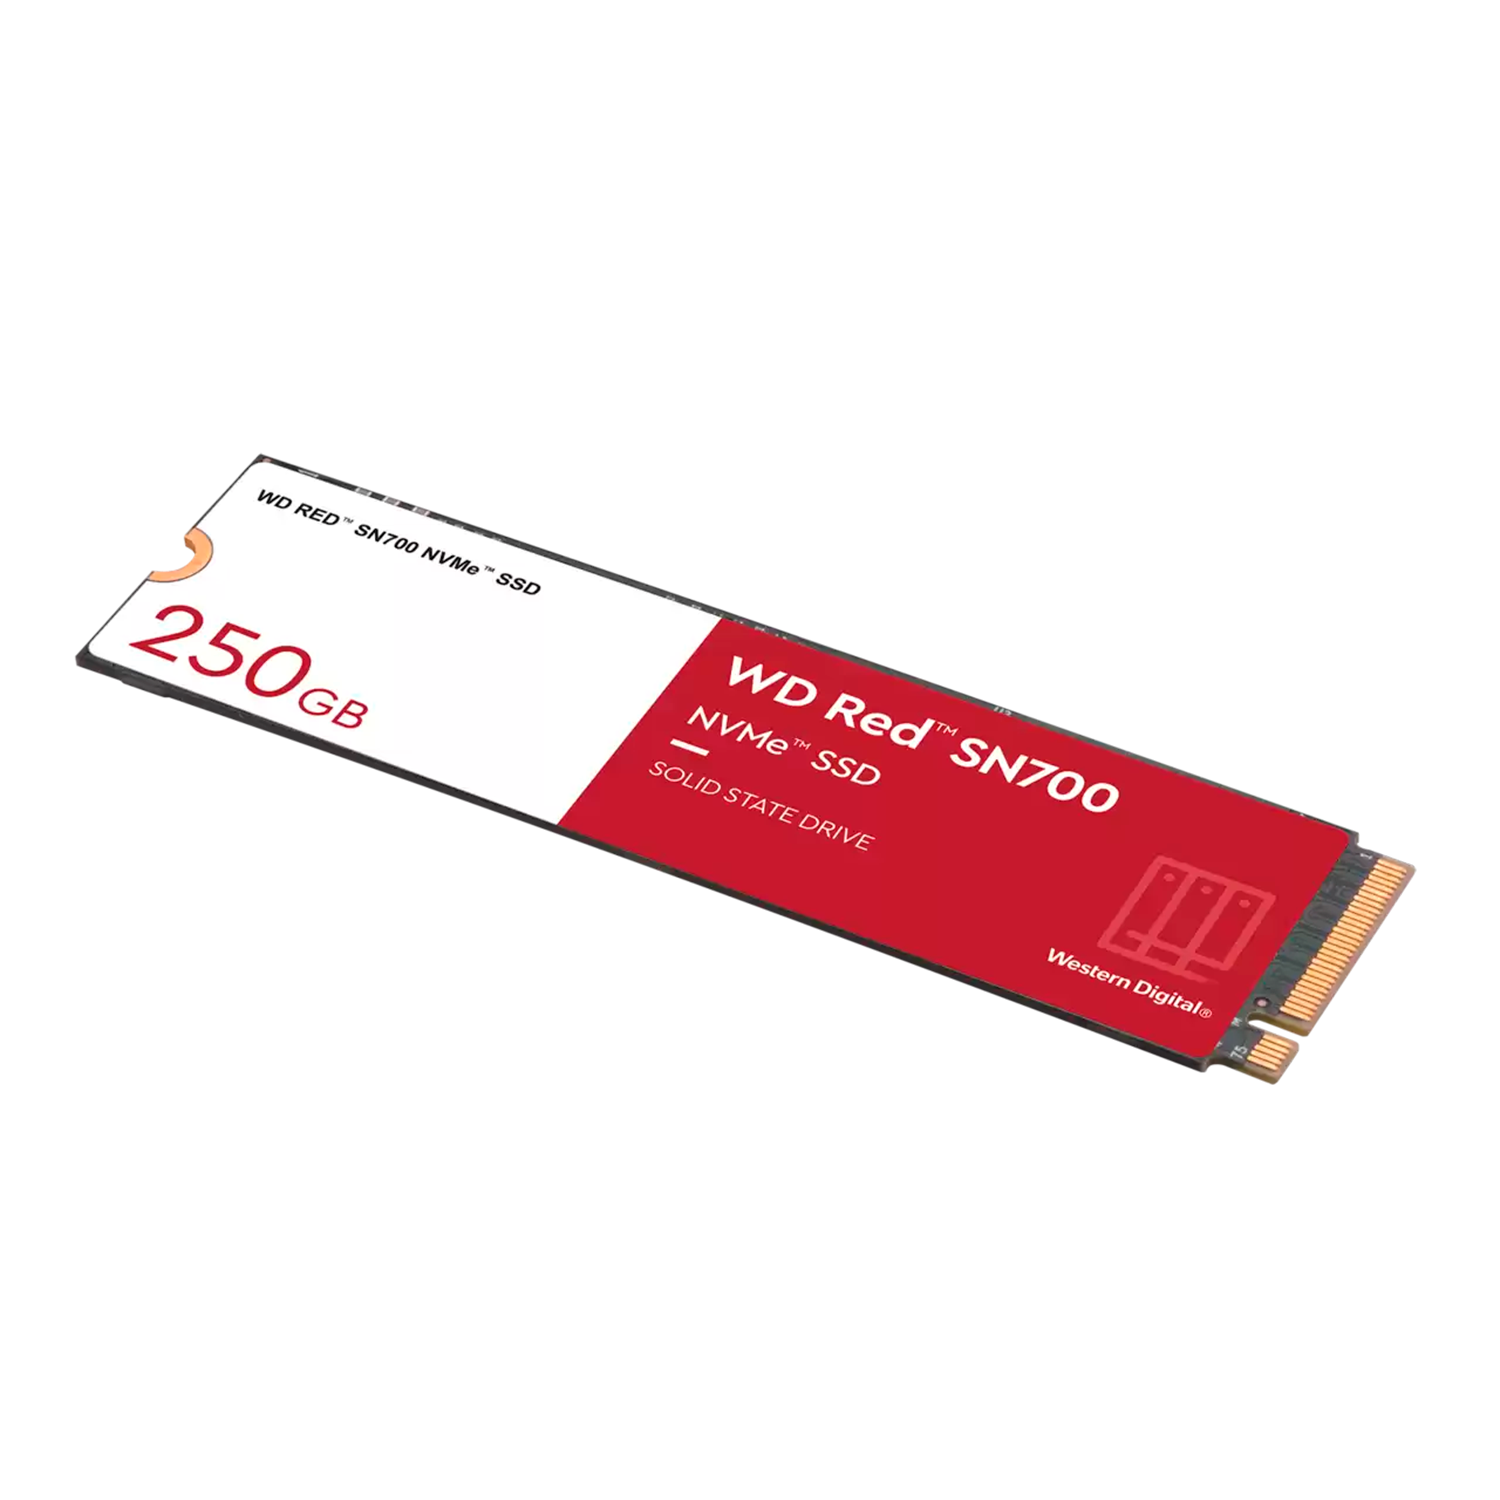 SSD M.2 Western Digital SN700 Red 250GB NVME Gen 3 - WDS250G1R0C